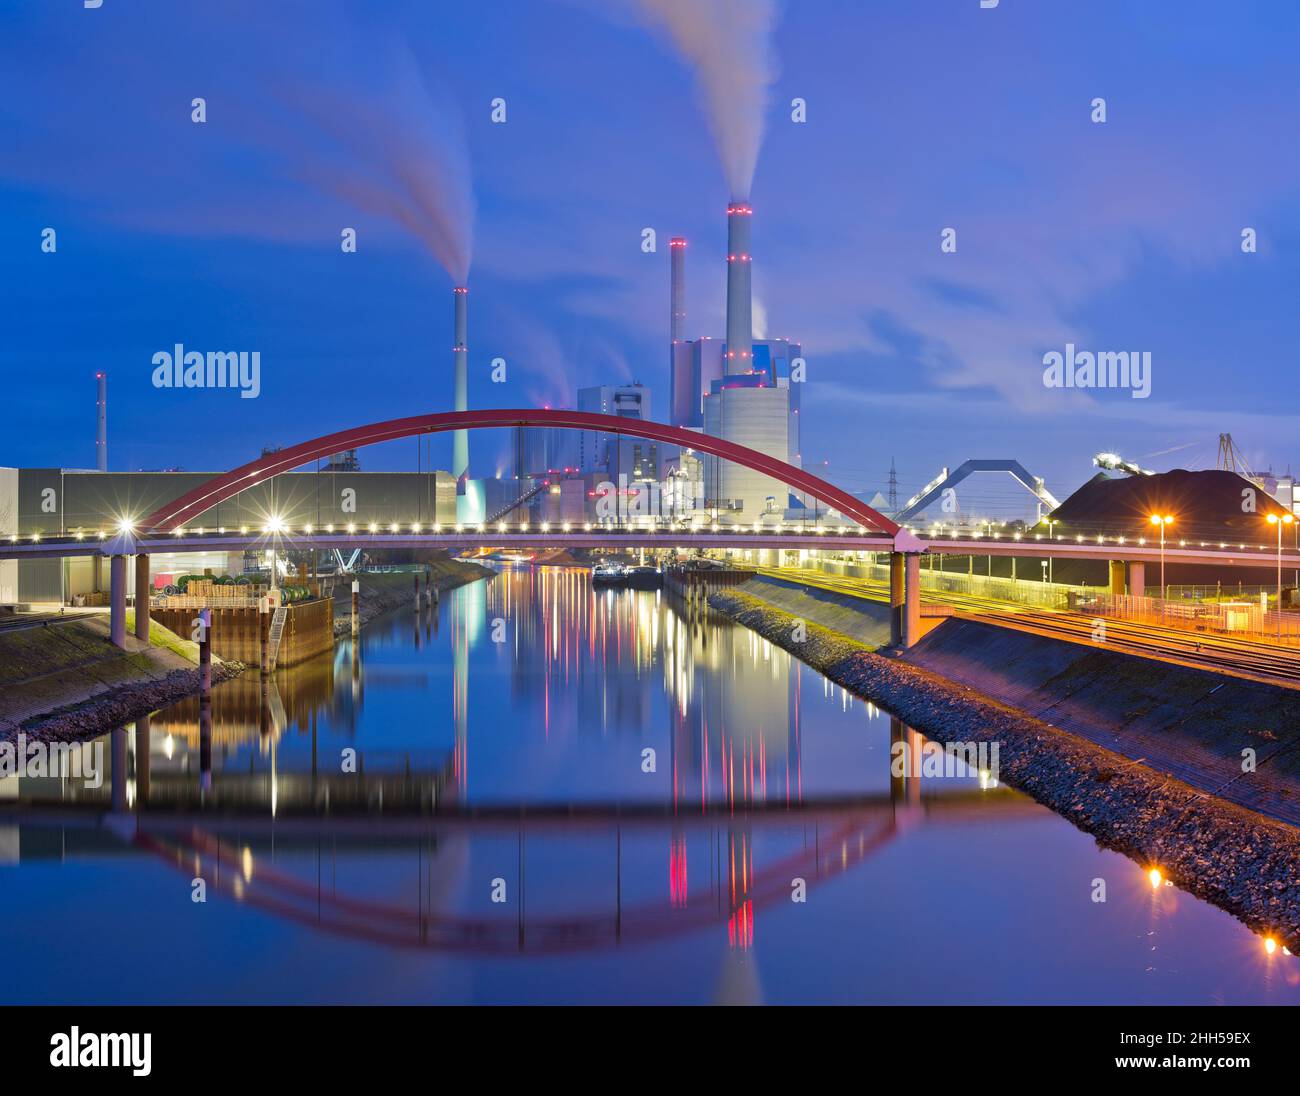 Large illuminated coal station causing global warming and climate change Stock Photo